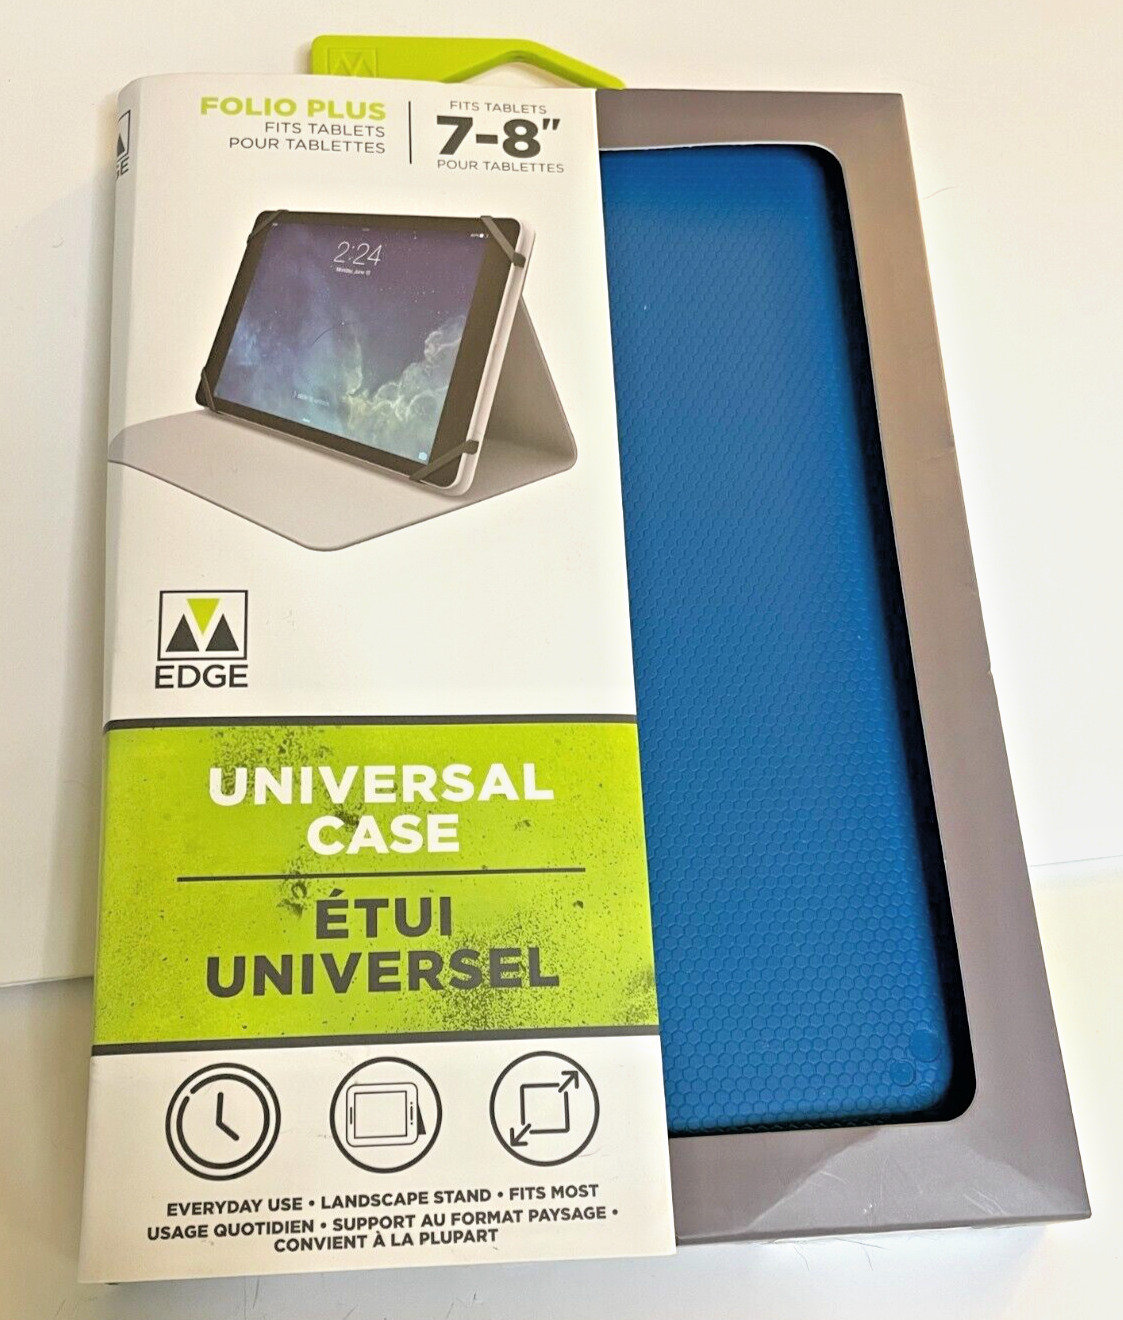 Folio Plus Universal Case Fits Tablets 7-8\